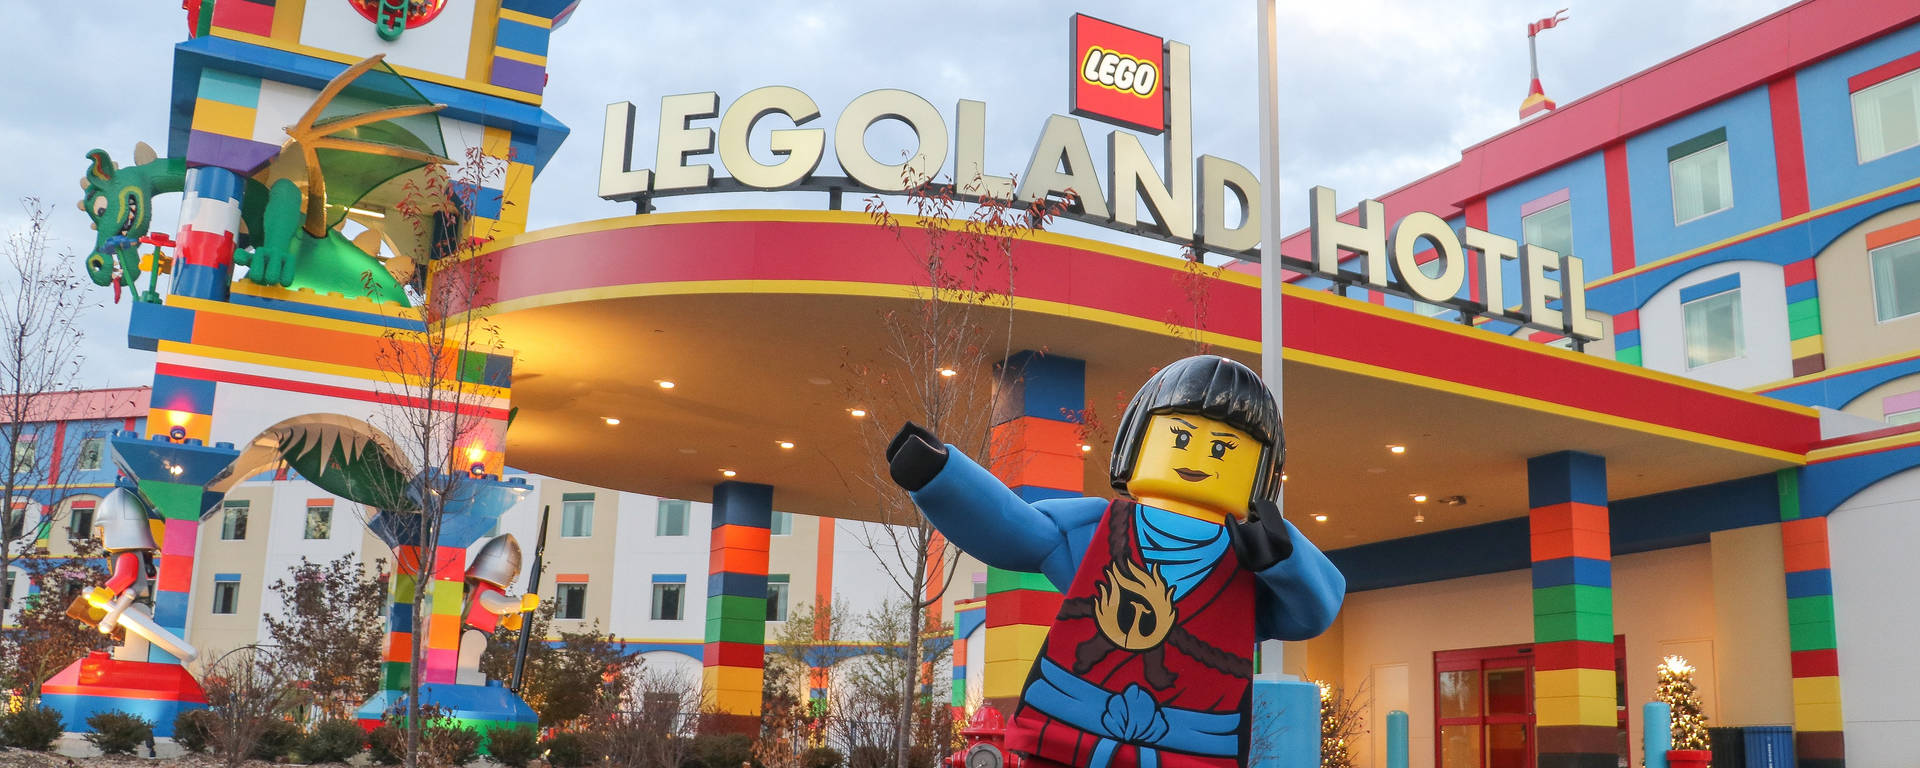 Legoland Hotel And Character Wallpaper